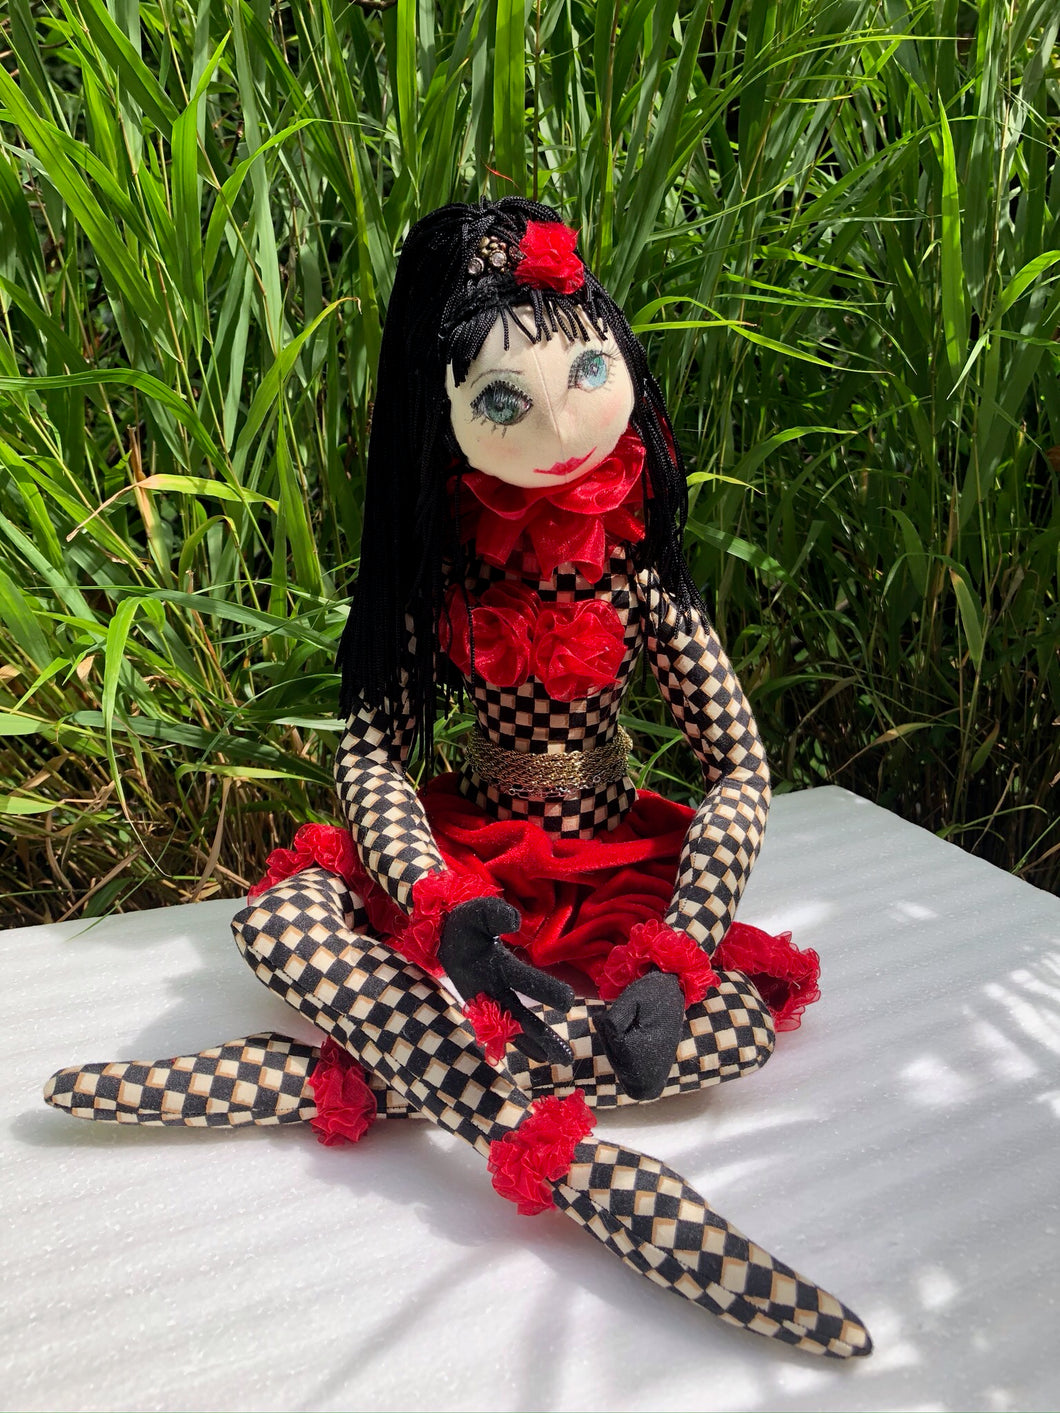 Handmade Art Doll - The Crafty Artisans